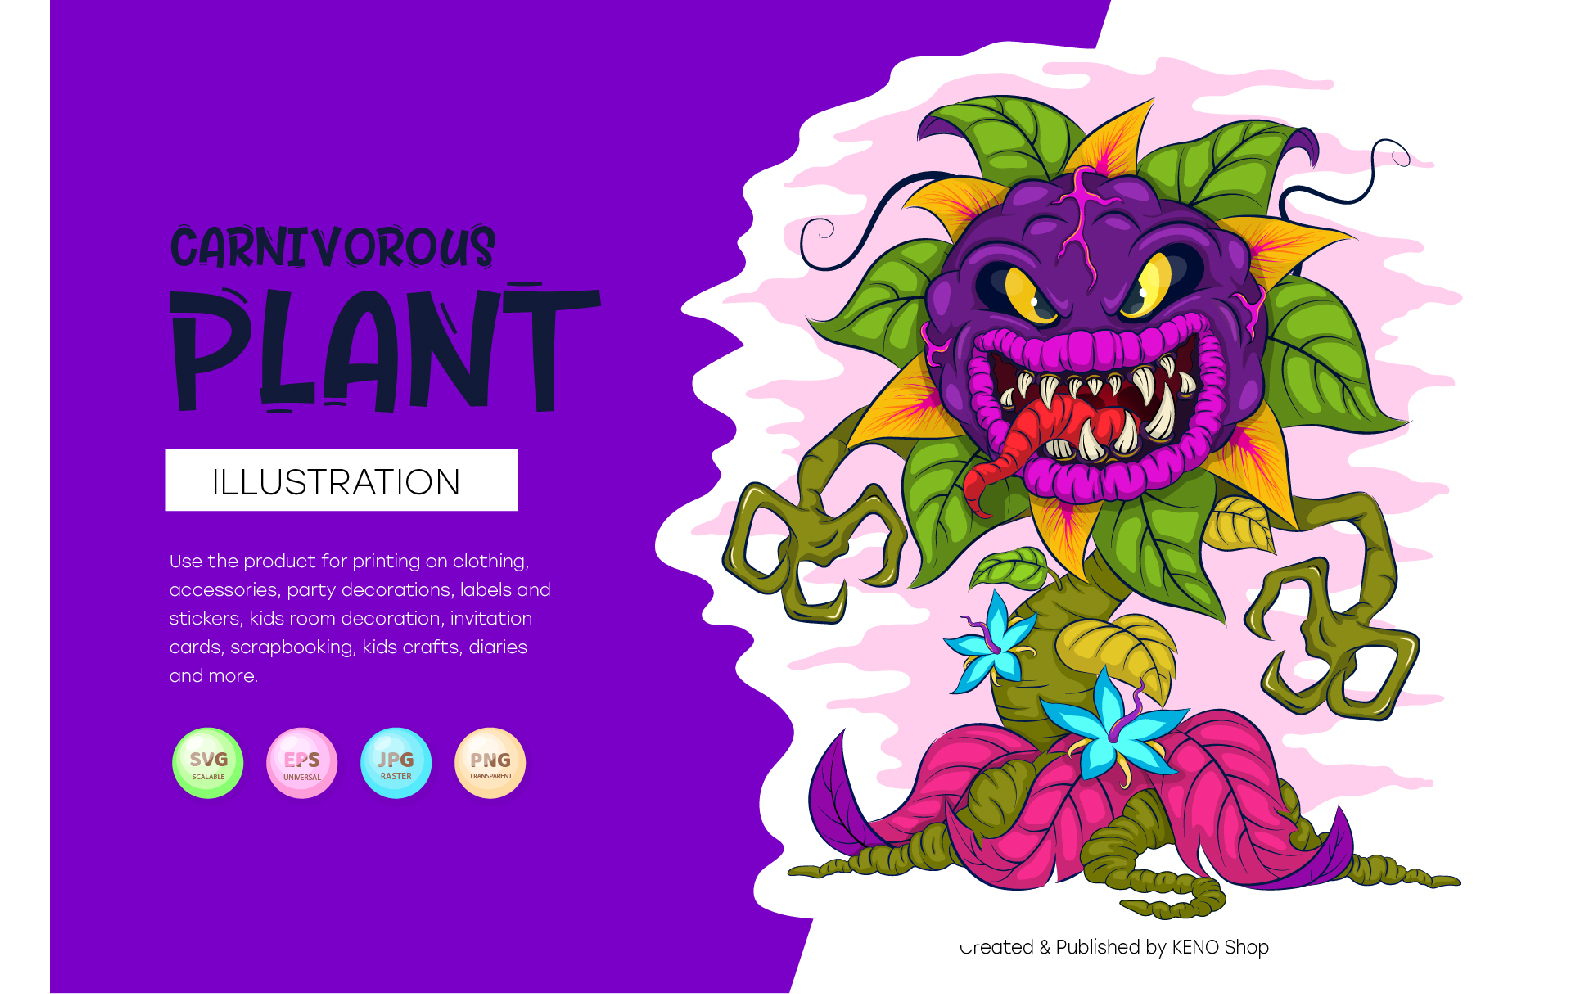 Cartoon Carnivorous Plant. T-Shirt, PNG, SVG.